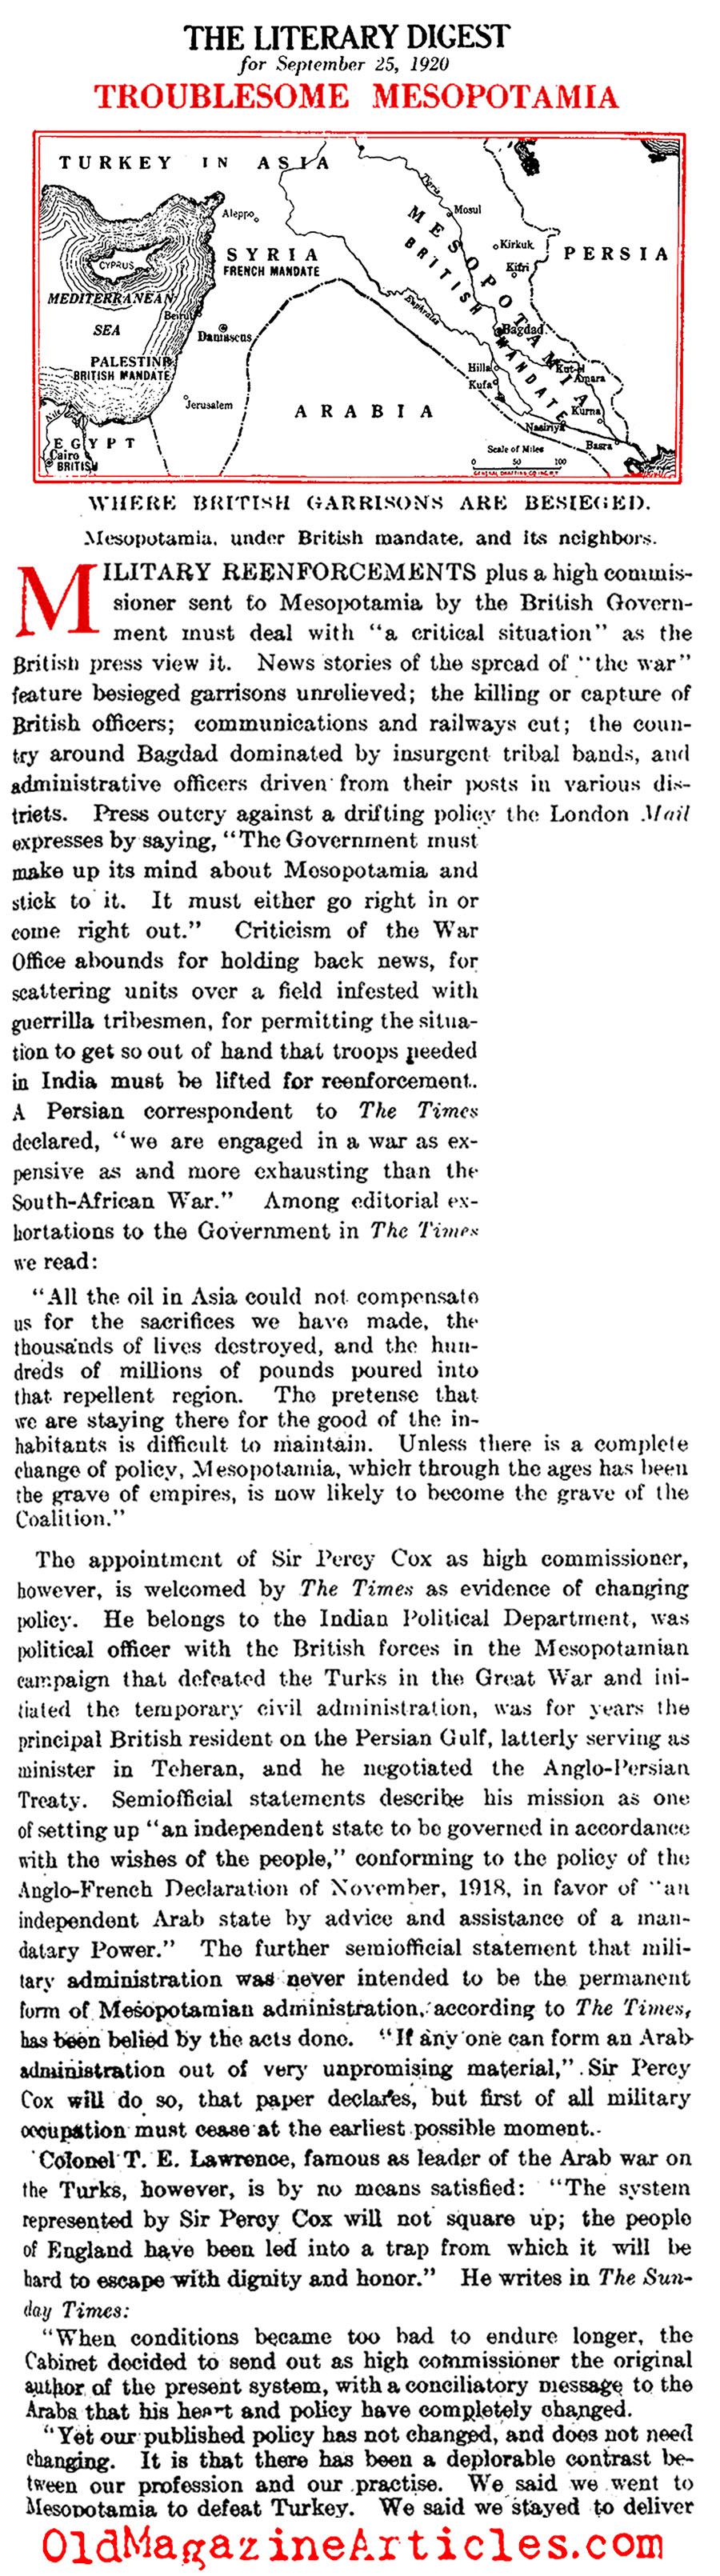 ''Troublesome Mesopotamia''  (Literary Digest, 1920)